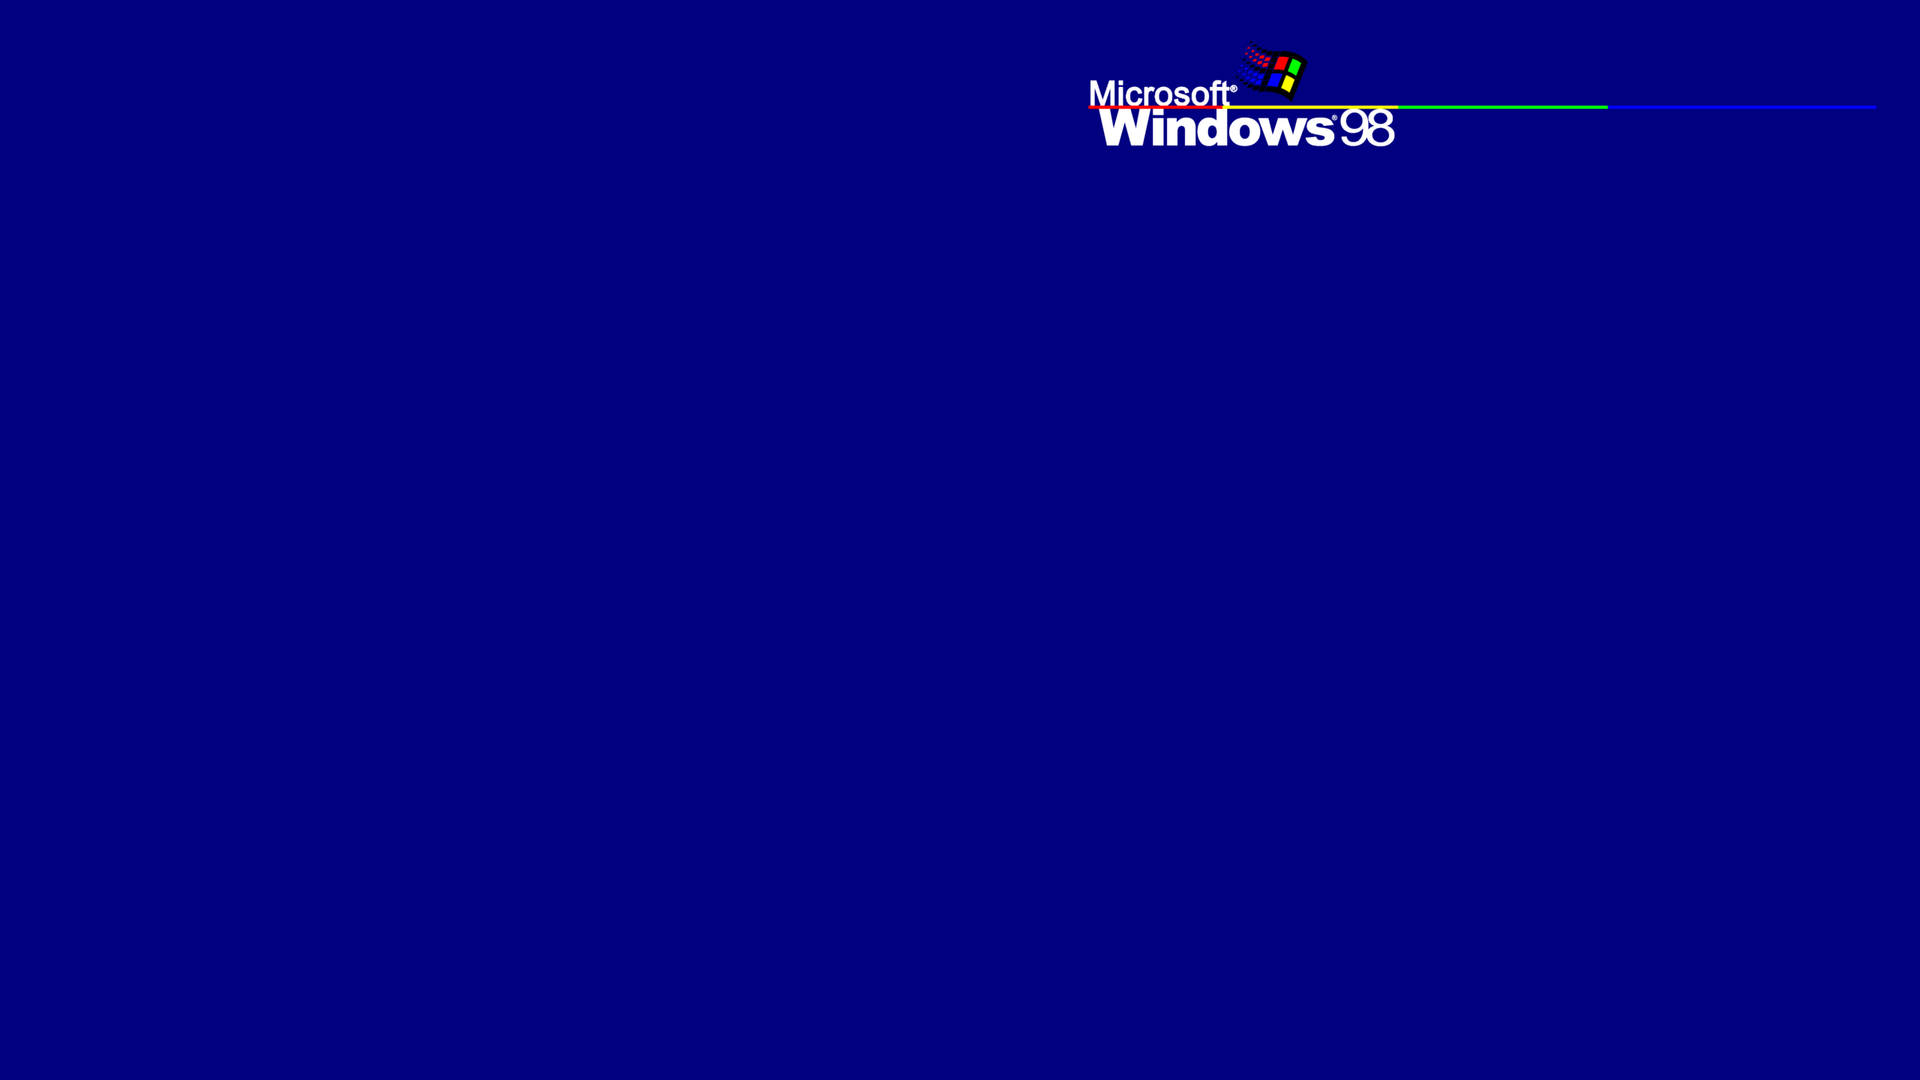 Windows 98 2560 X 1440 Wallpaper